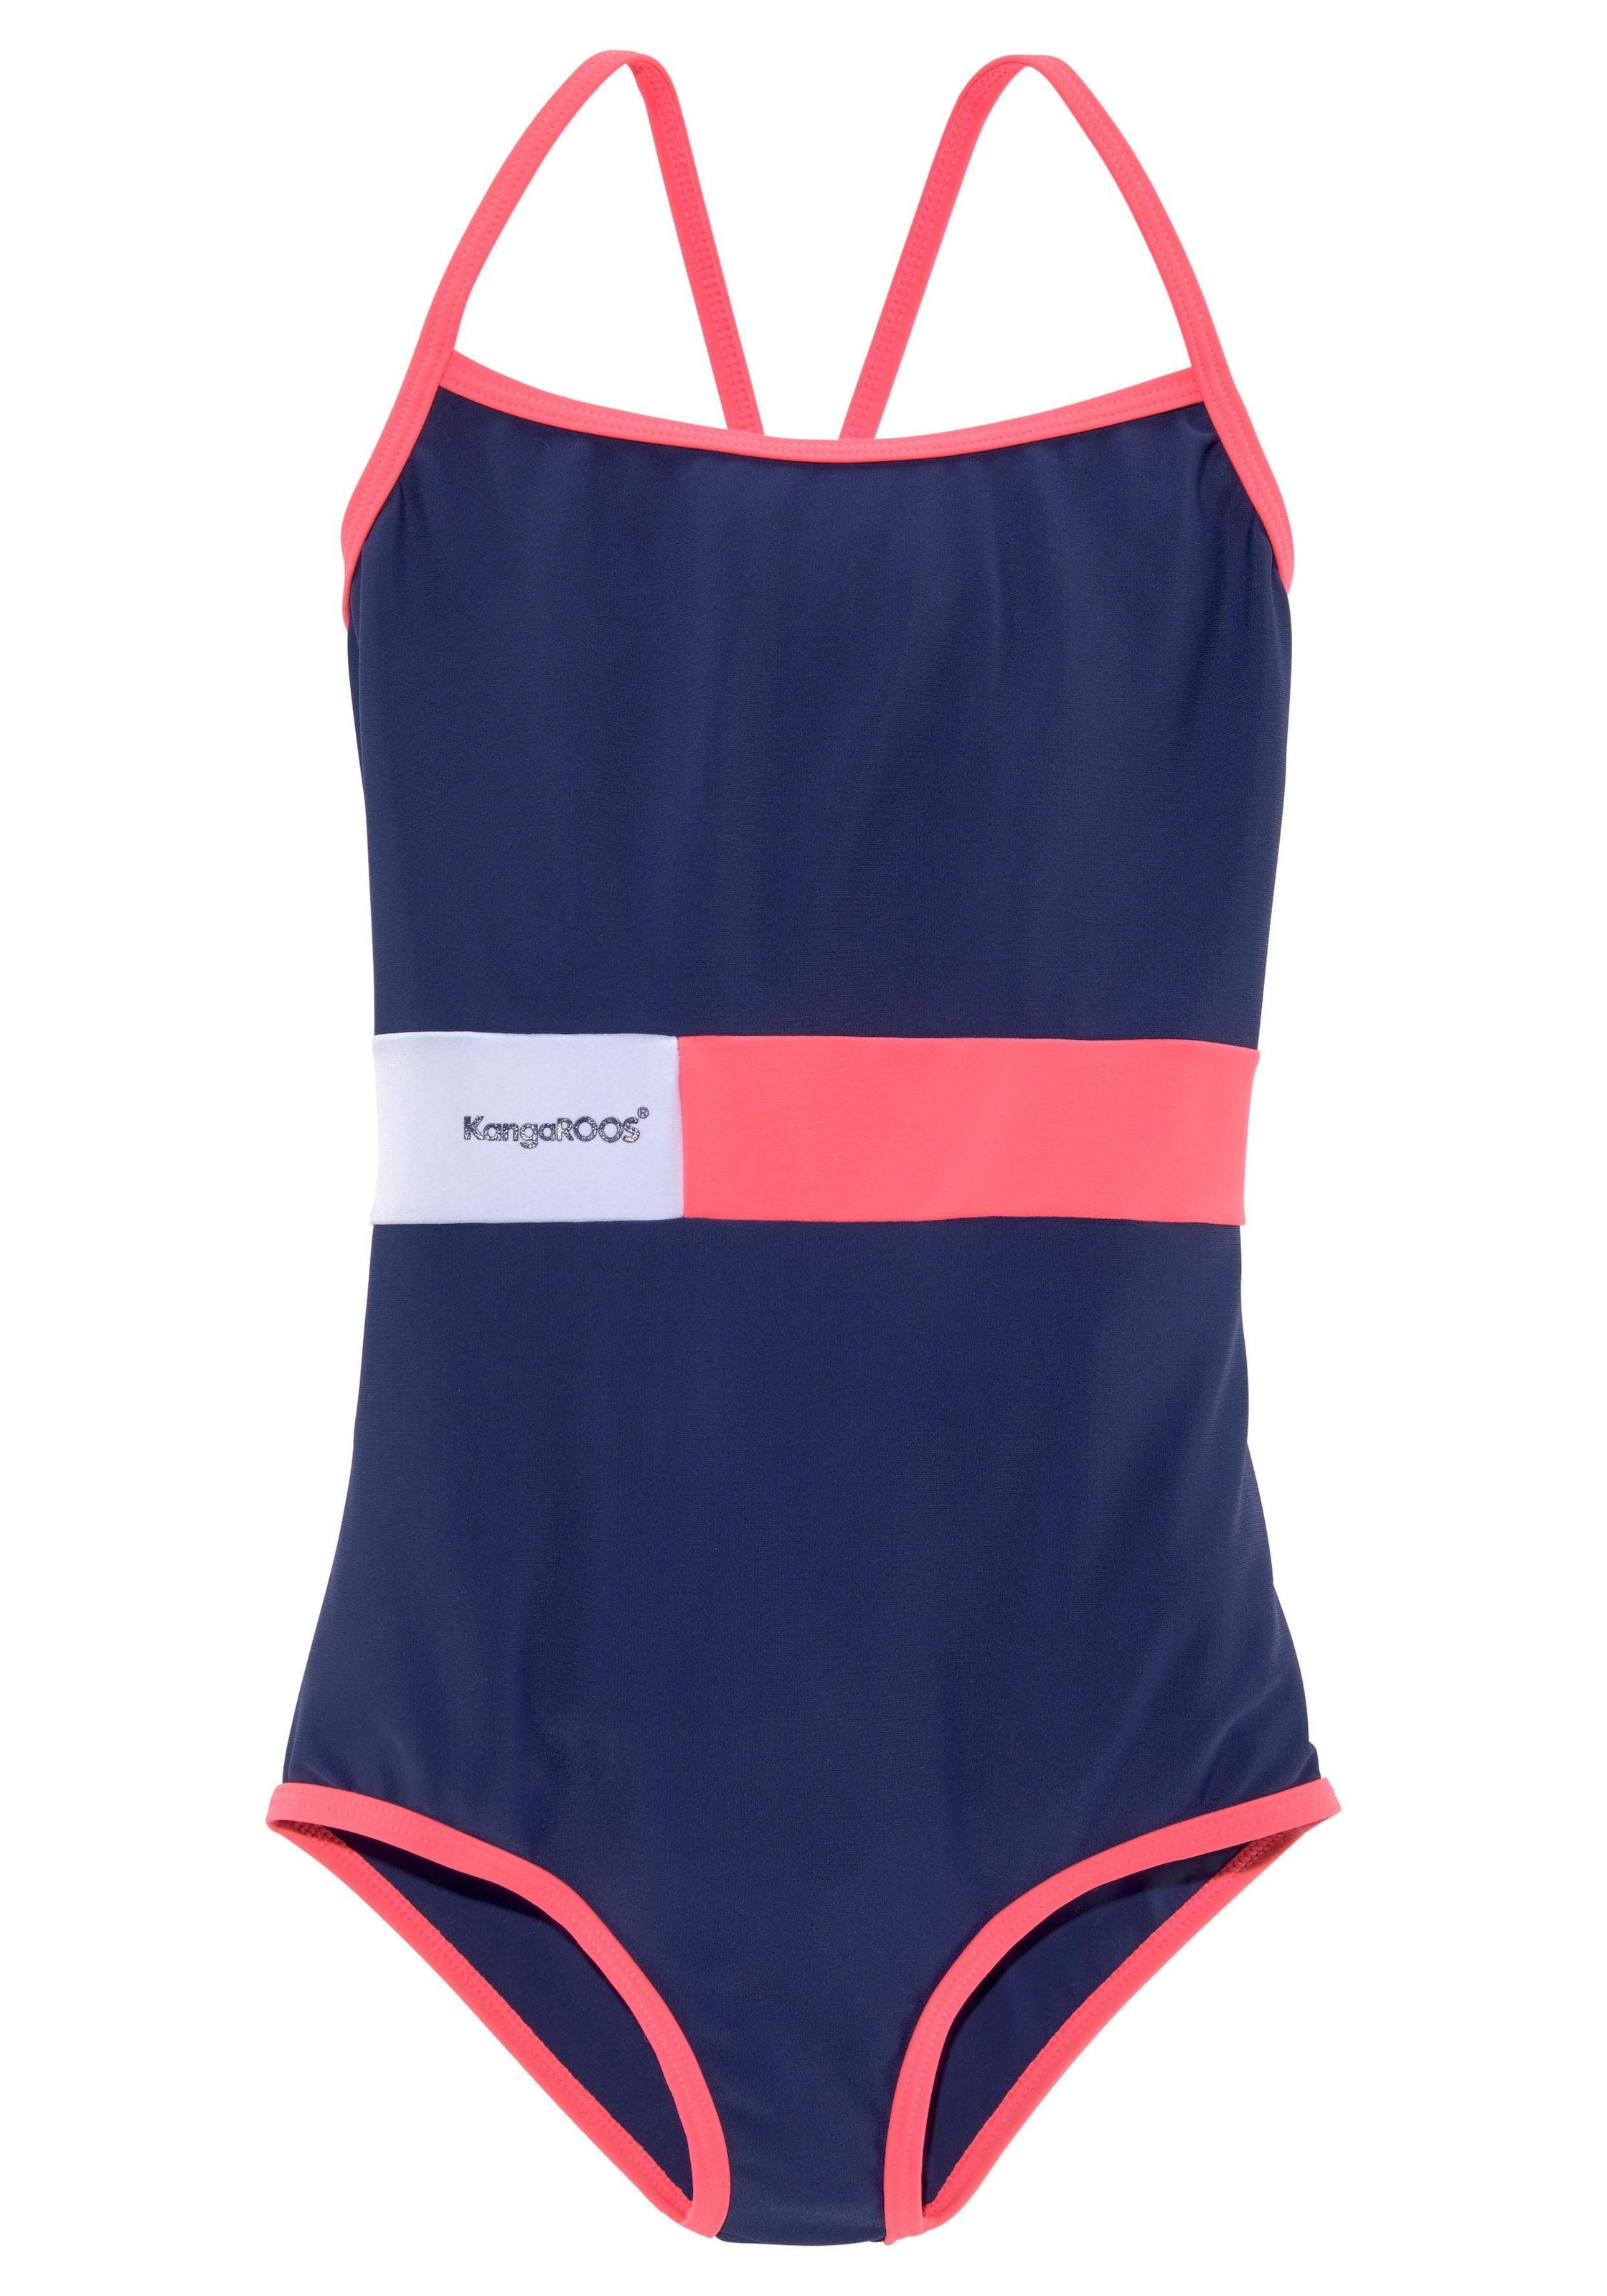 KangaROOS Badeanzug, (1 St.), im bestellen jetzt Colorblocking-Look